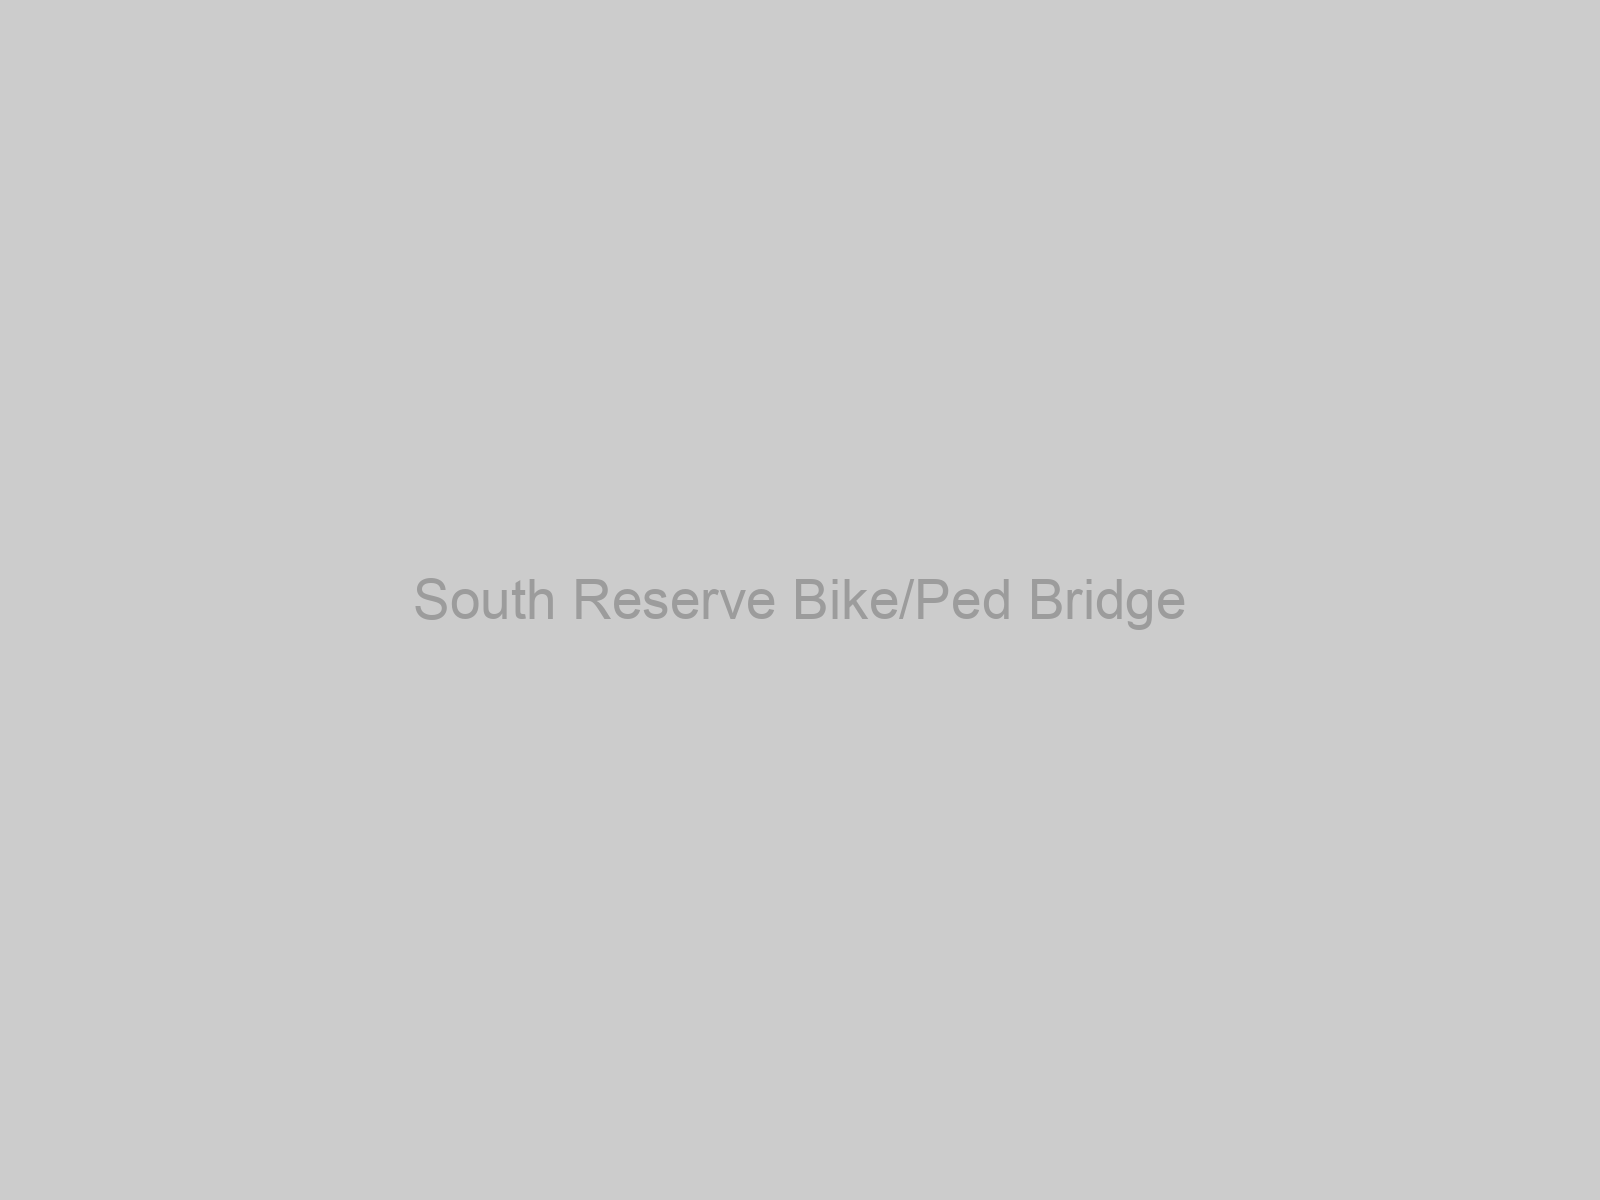 South Reserve Bike/Ped Bridge